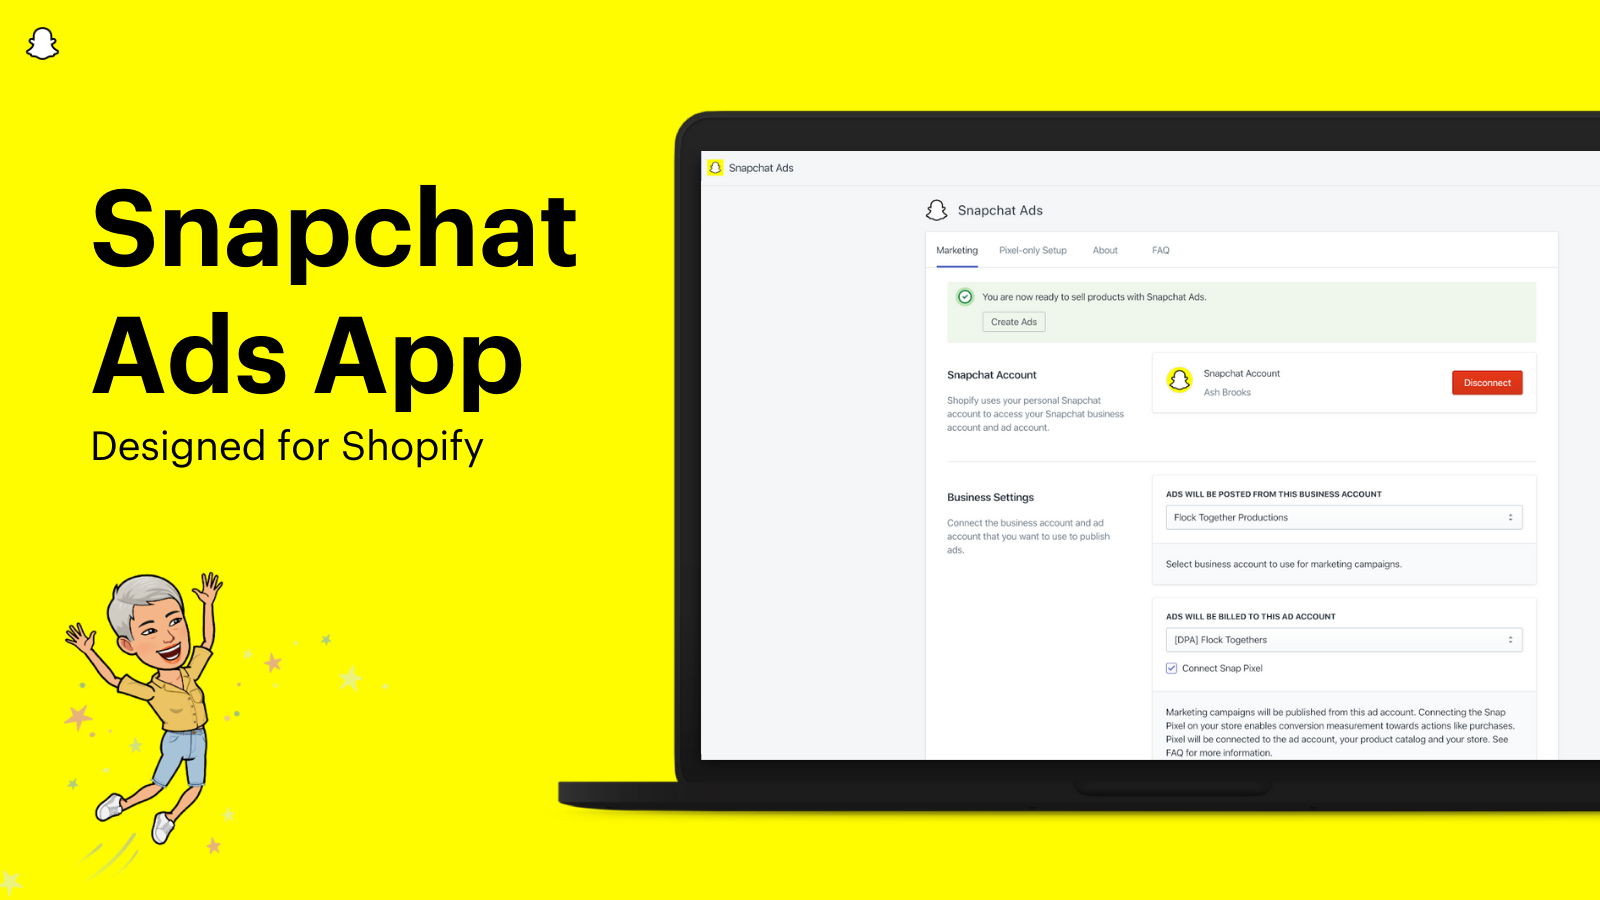 Snapchat Ads App, designed for Shopify merchants